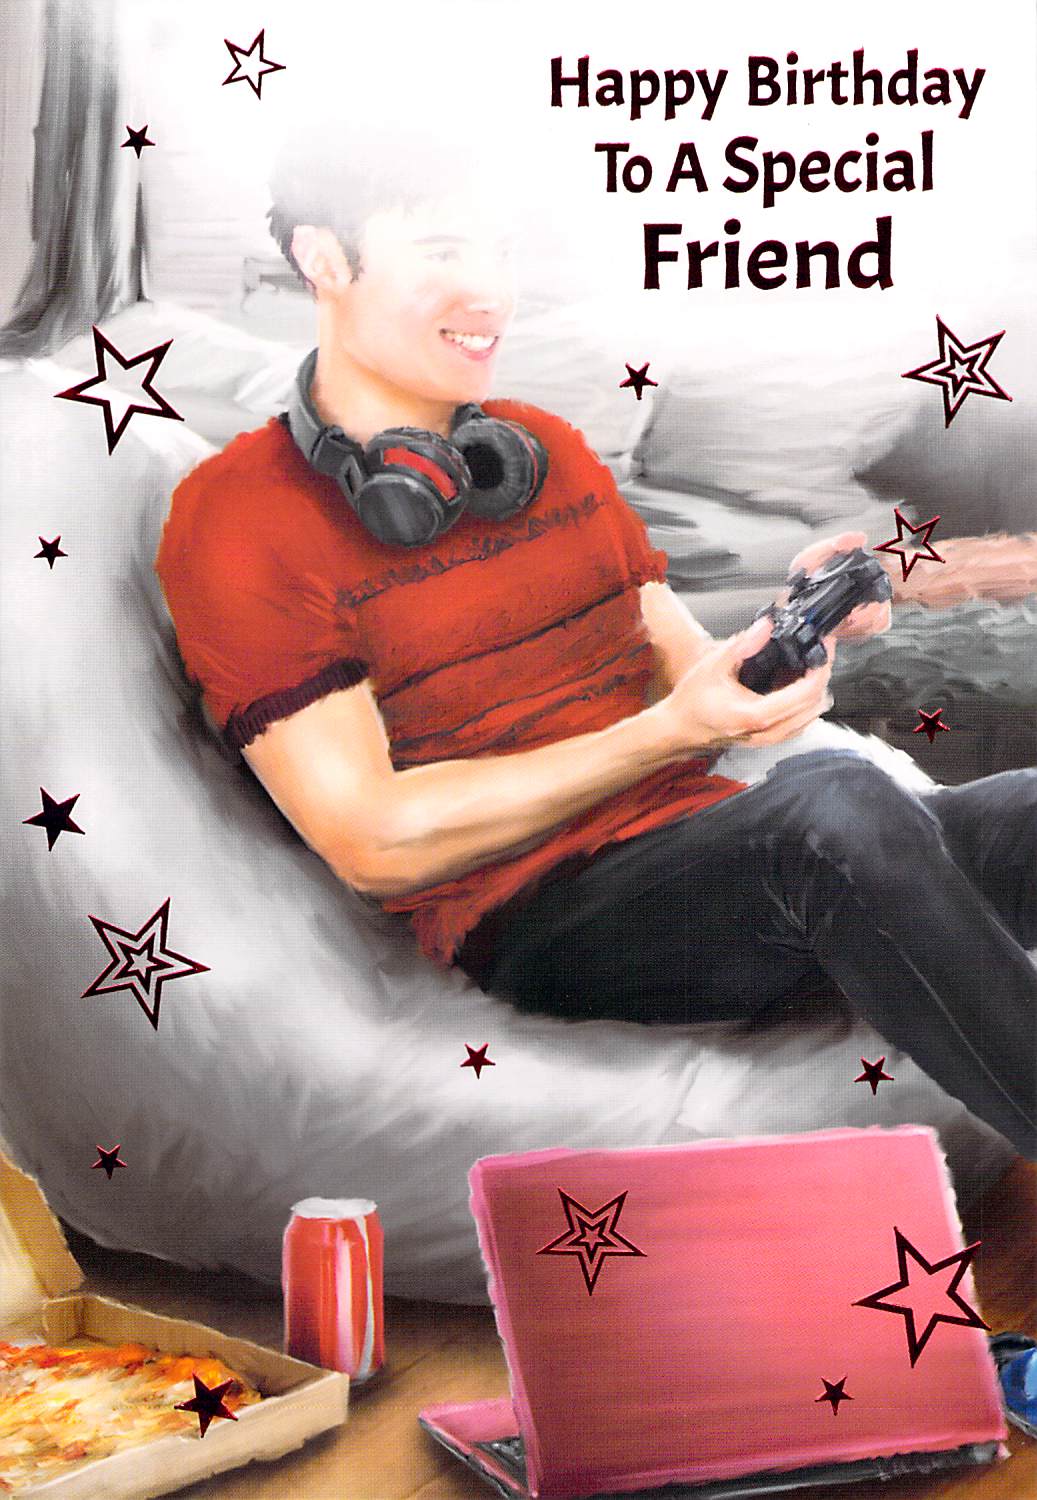 Friend - Birthday Card - Gamer - Greeting Card - Free Postage